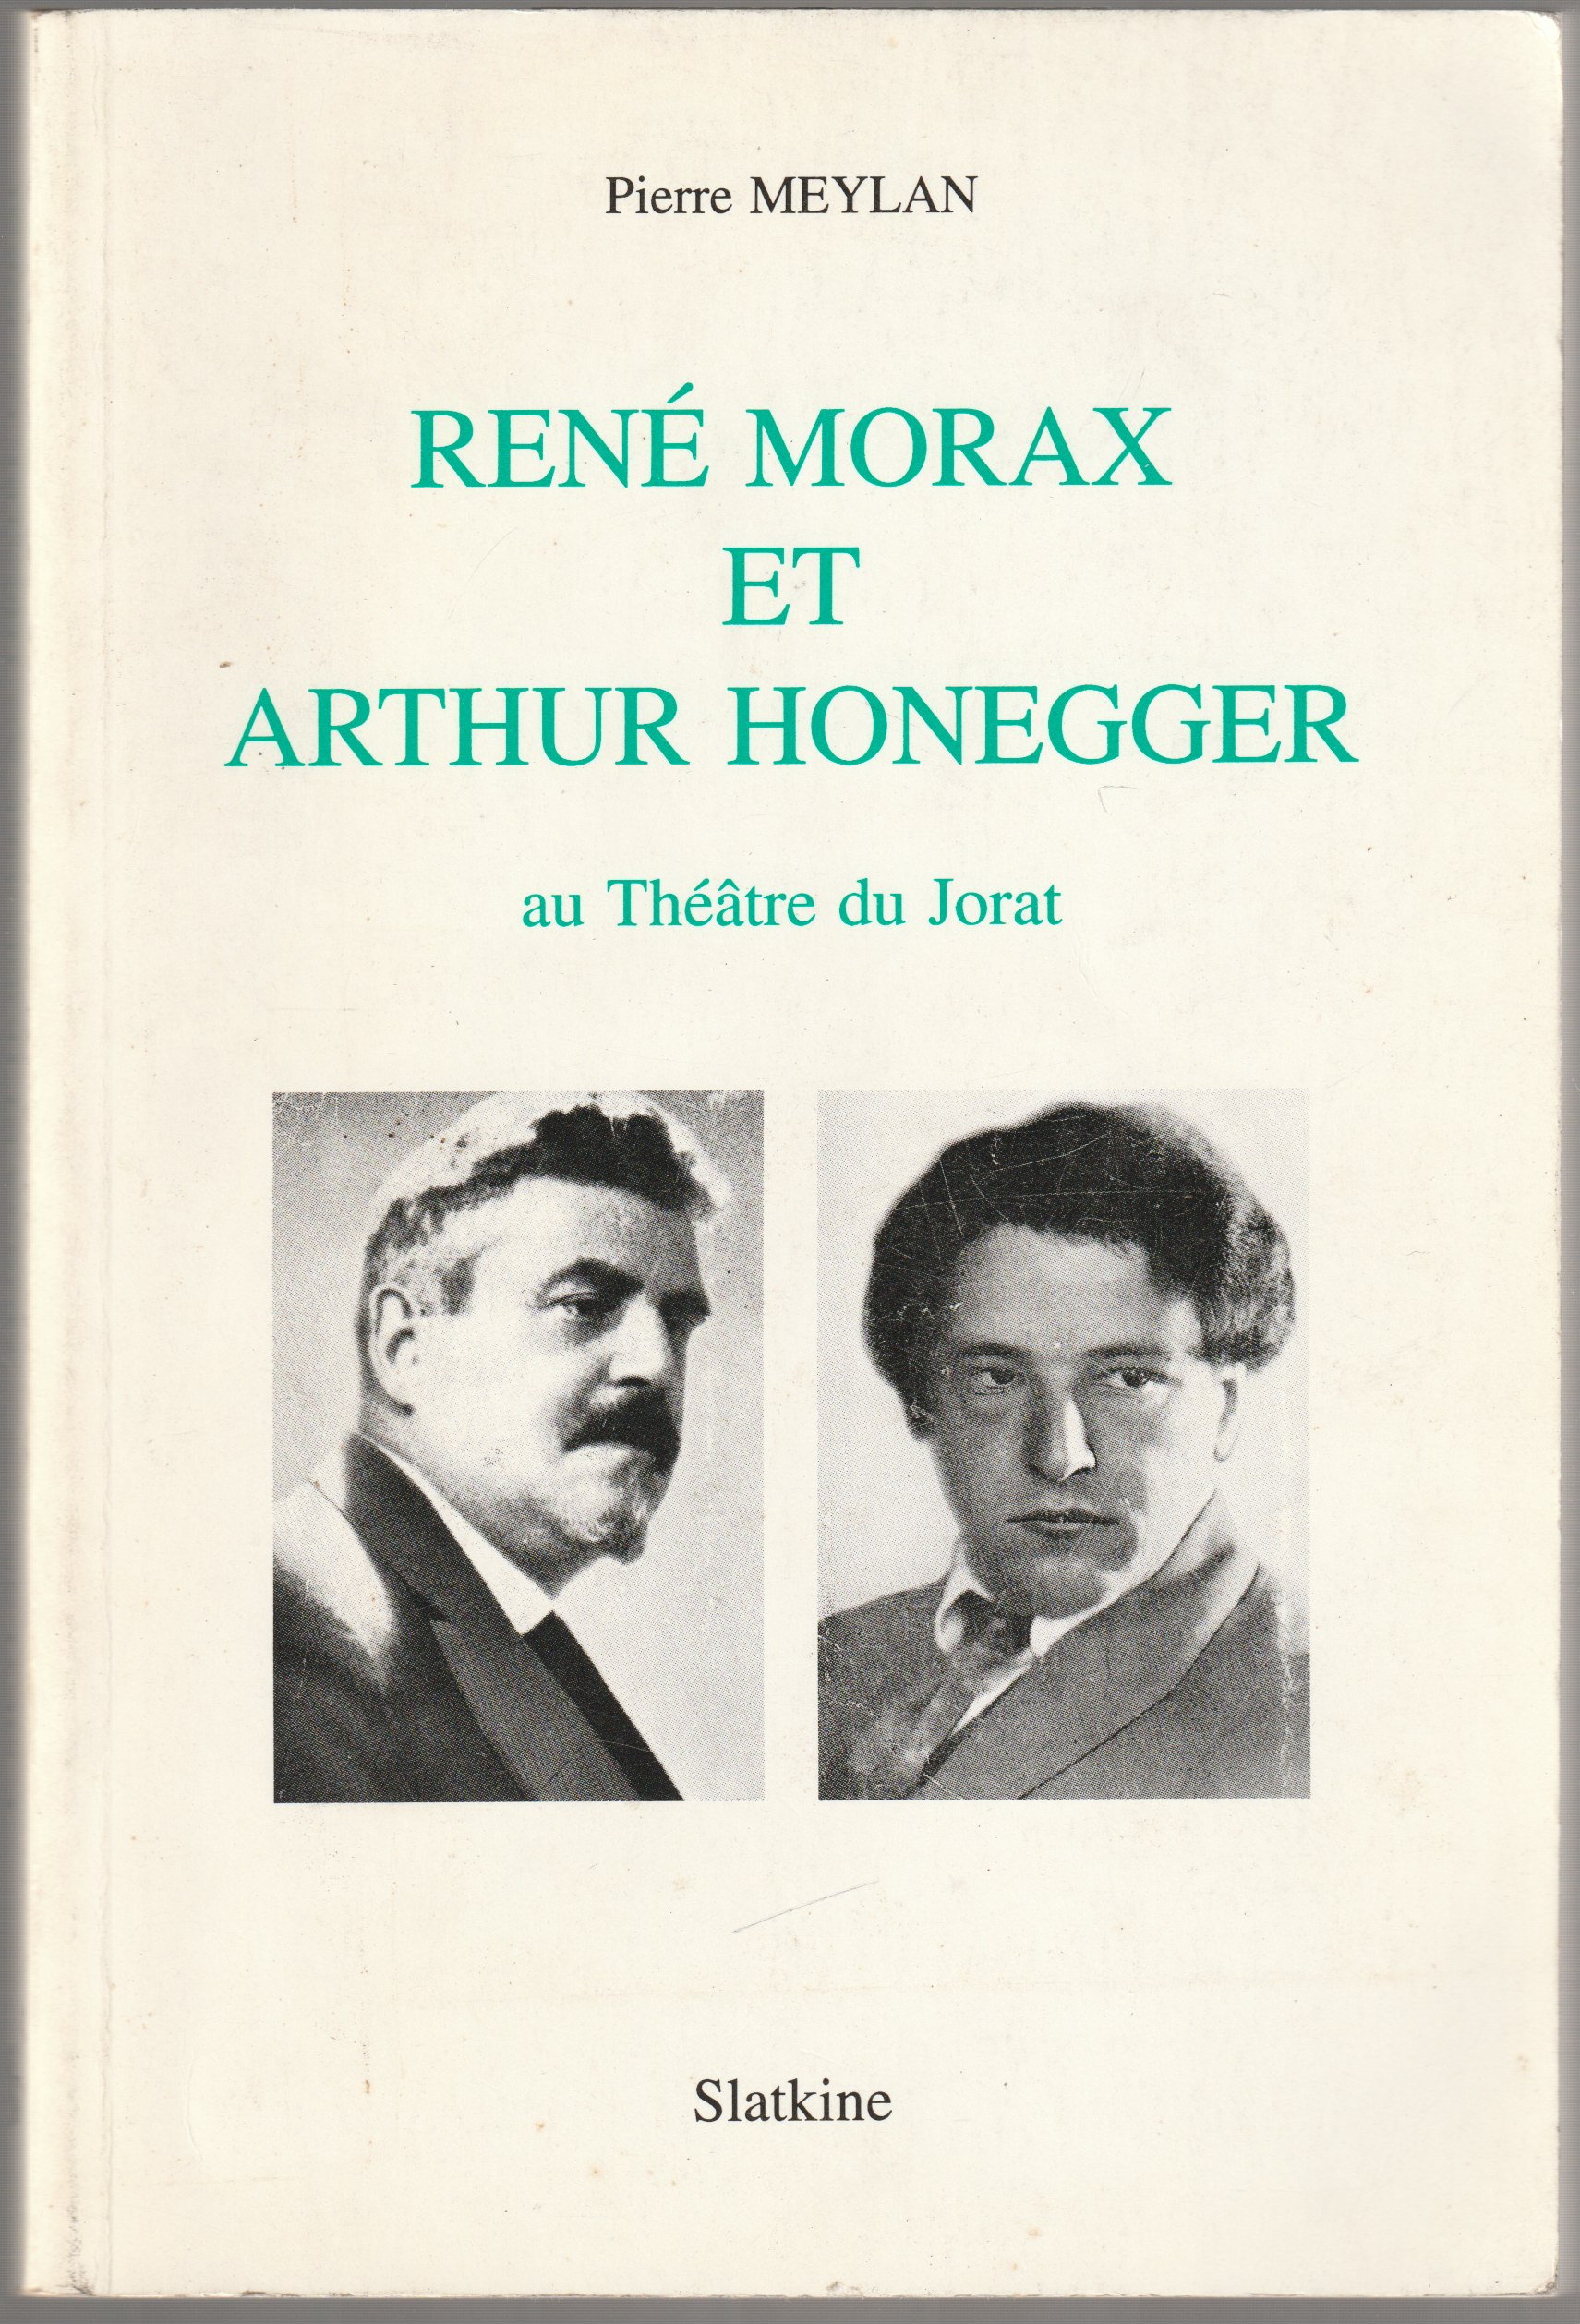 Rene Morax et Arthur Honegger au Theatre du Jorat.